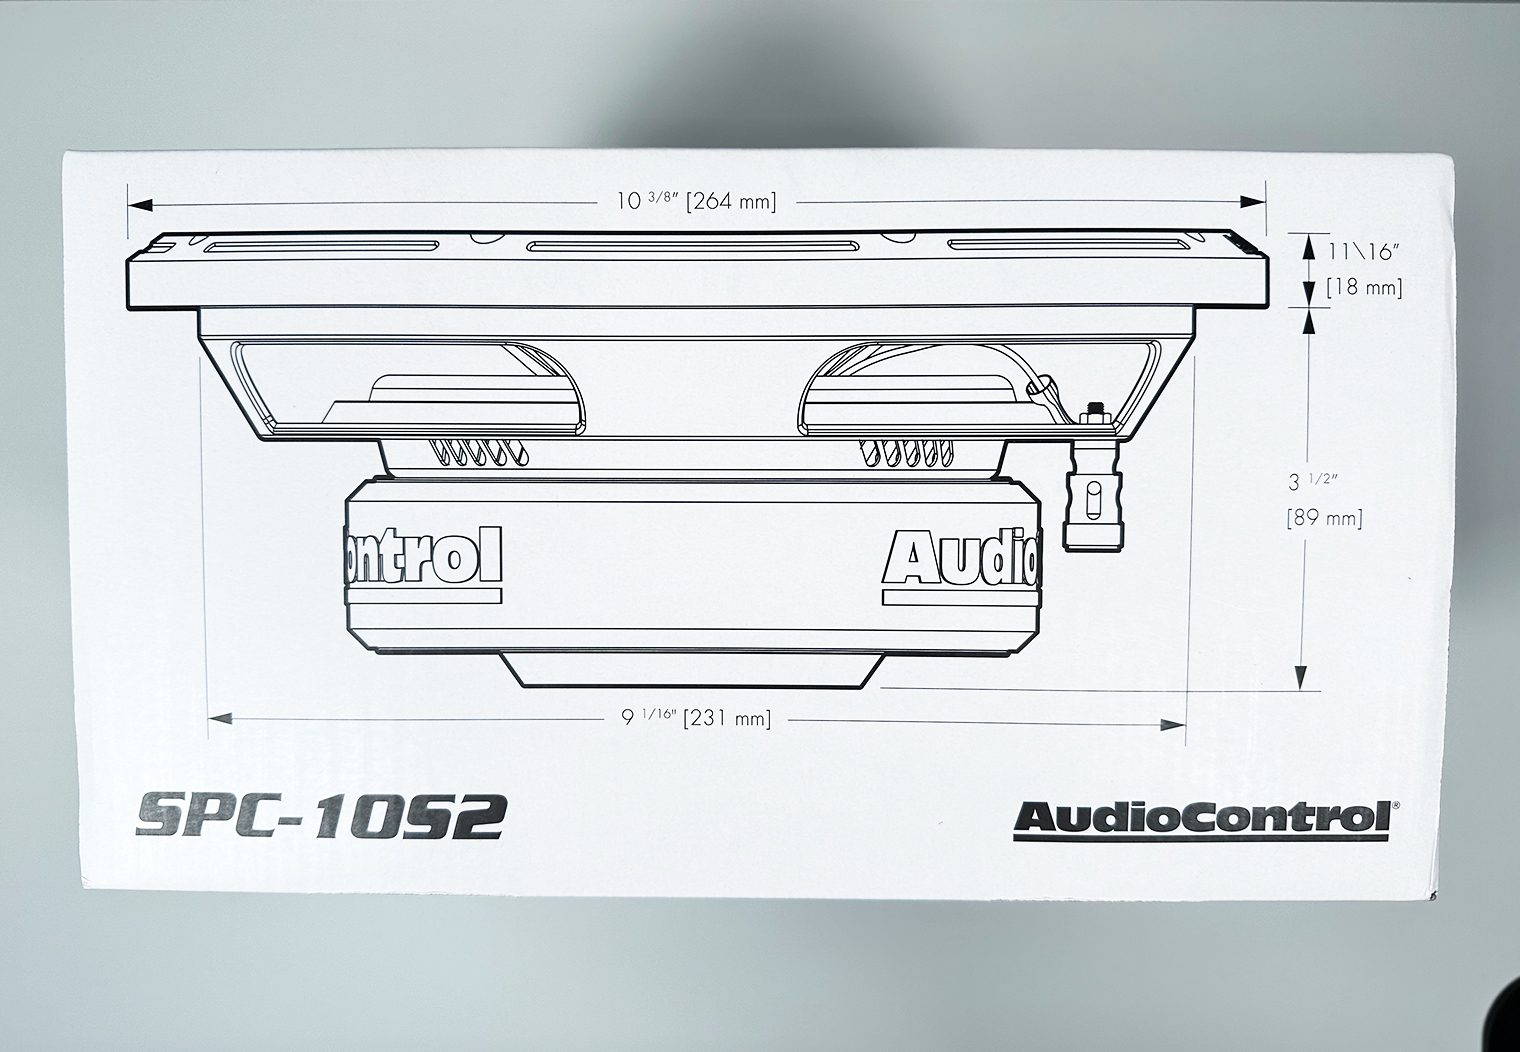 AudioControl SPC-10S2 side packaging dimensions